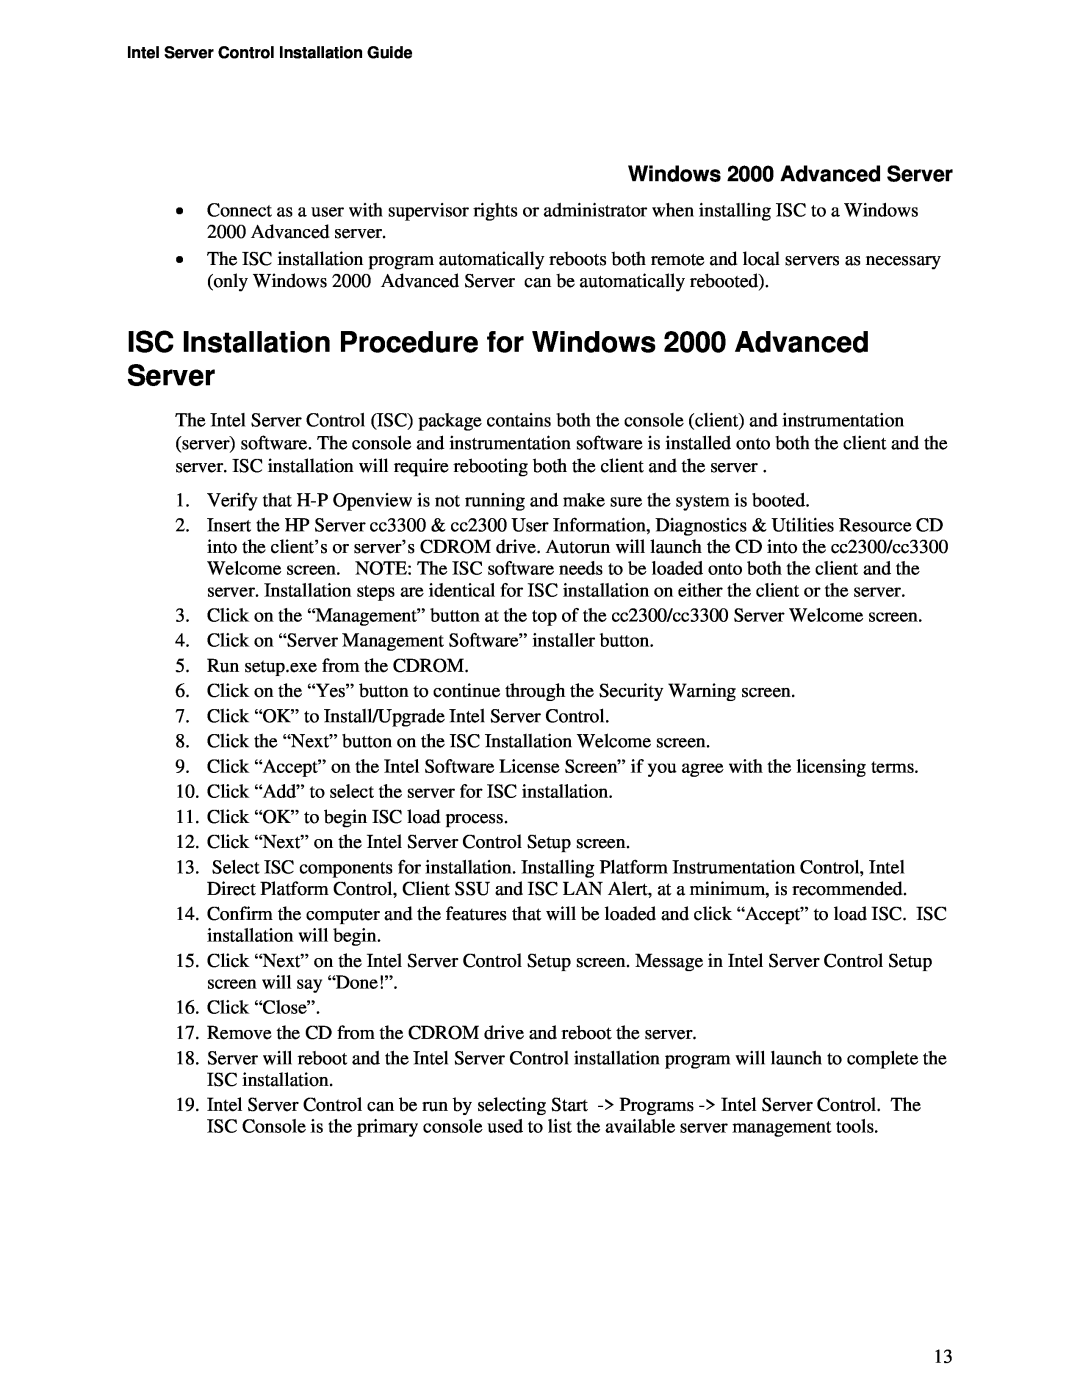 Intel cc2300, cc3300 manual Windows 2000 Advanced Server 